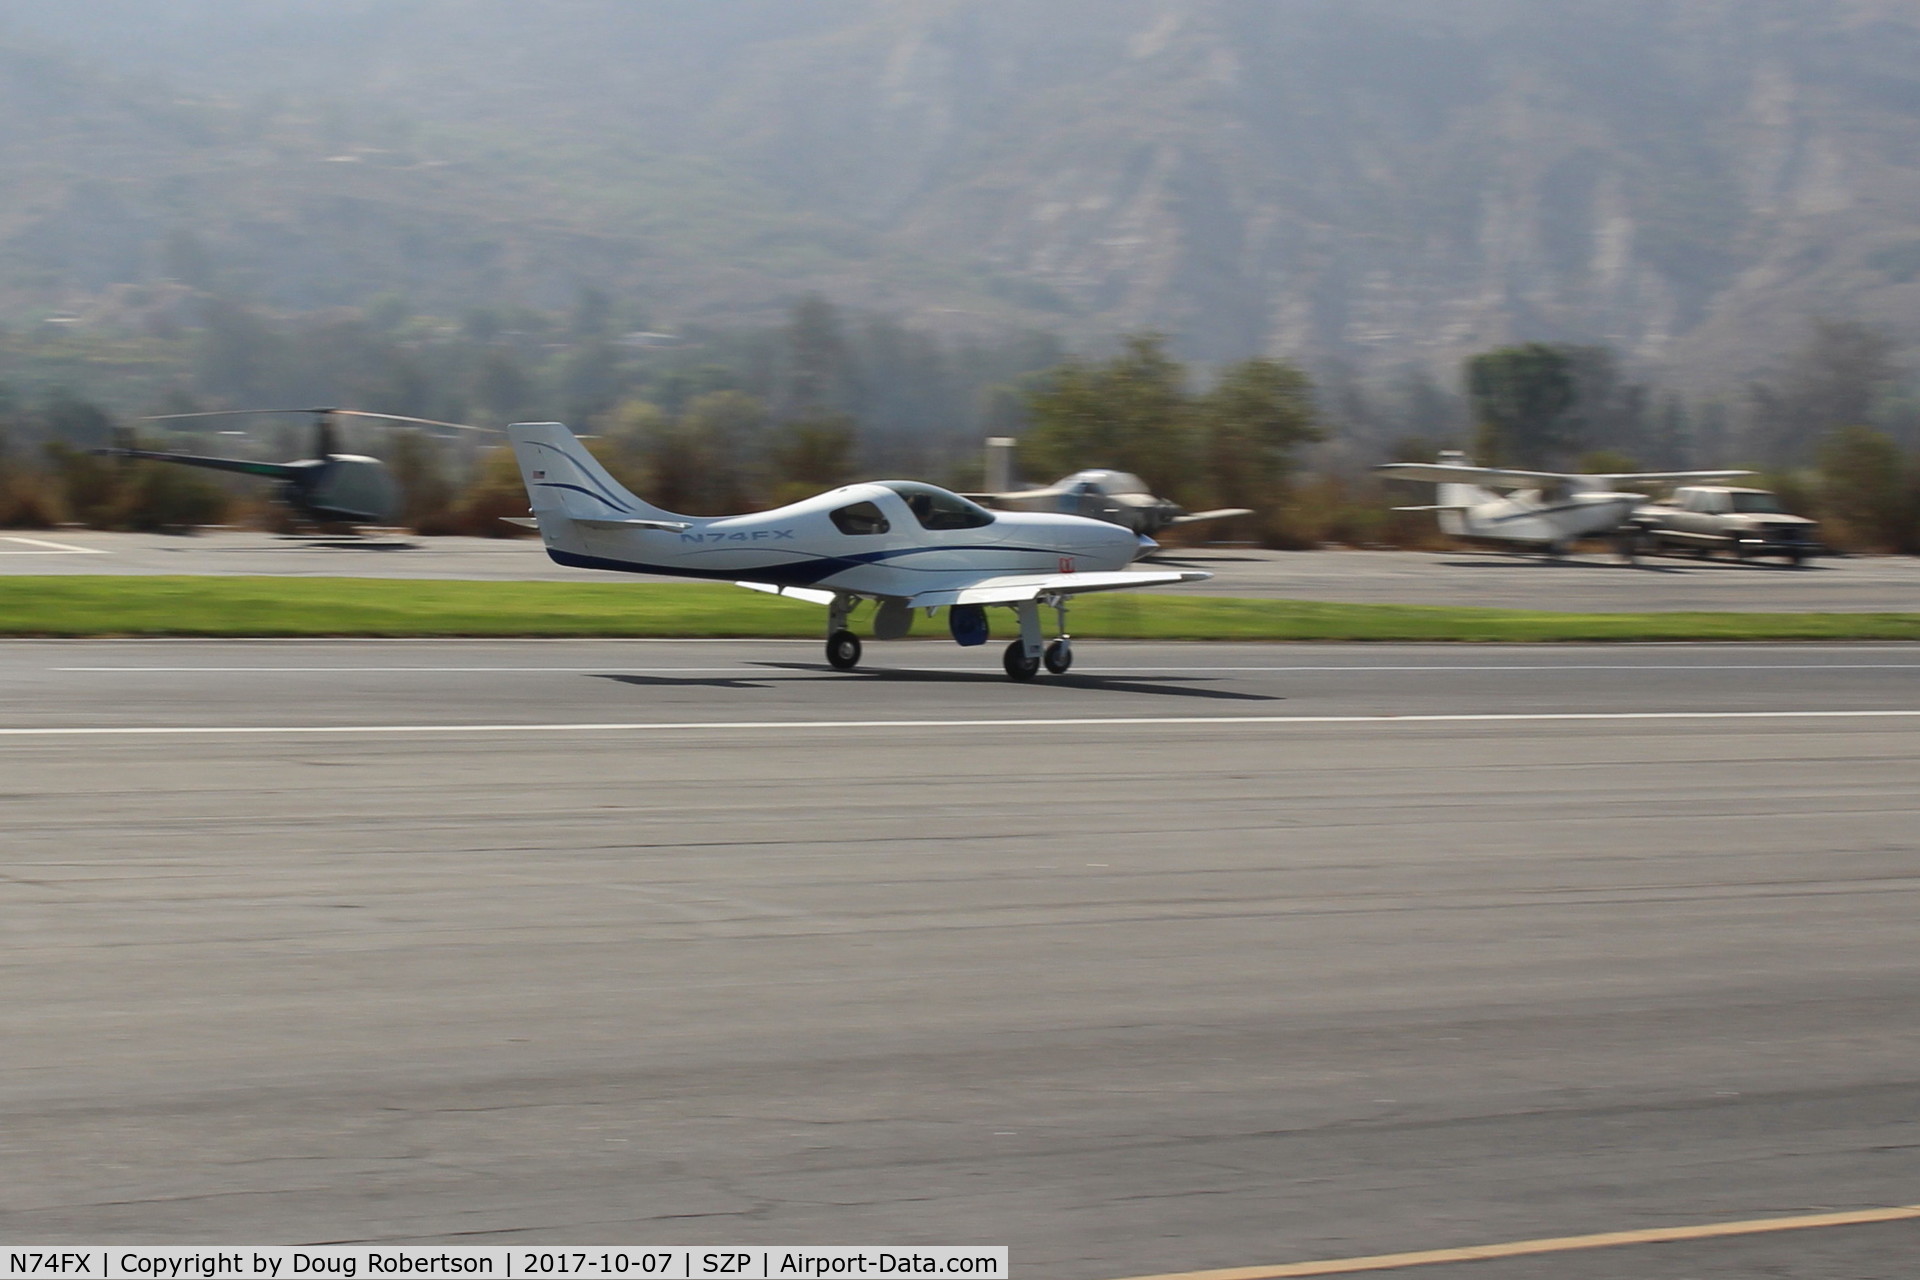 N74FX, 2007 Lancair Legacy C/N L2K-283, 2007 Larson LANCAIR LEGACY, Continental O-550 310 Hp, landing roll Rwy 22